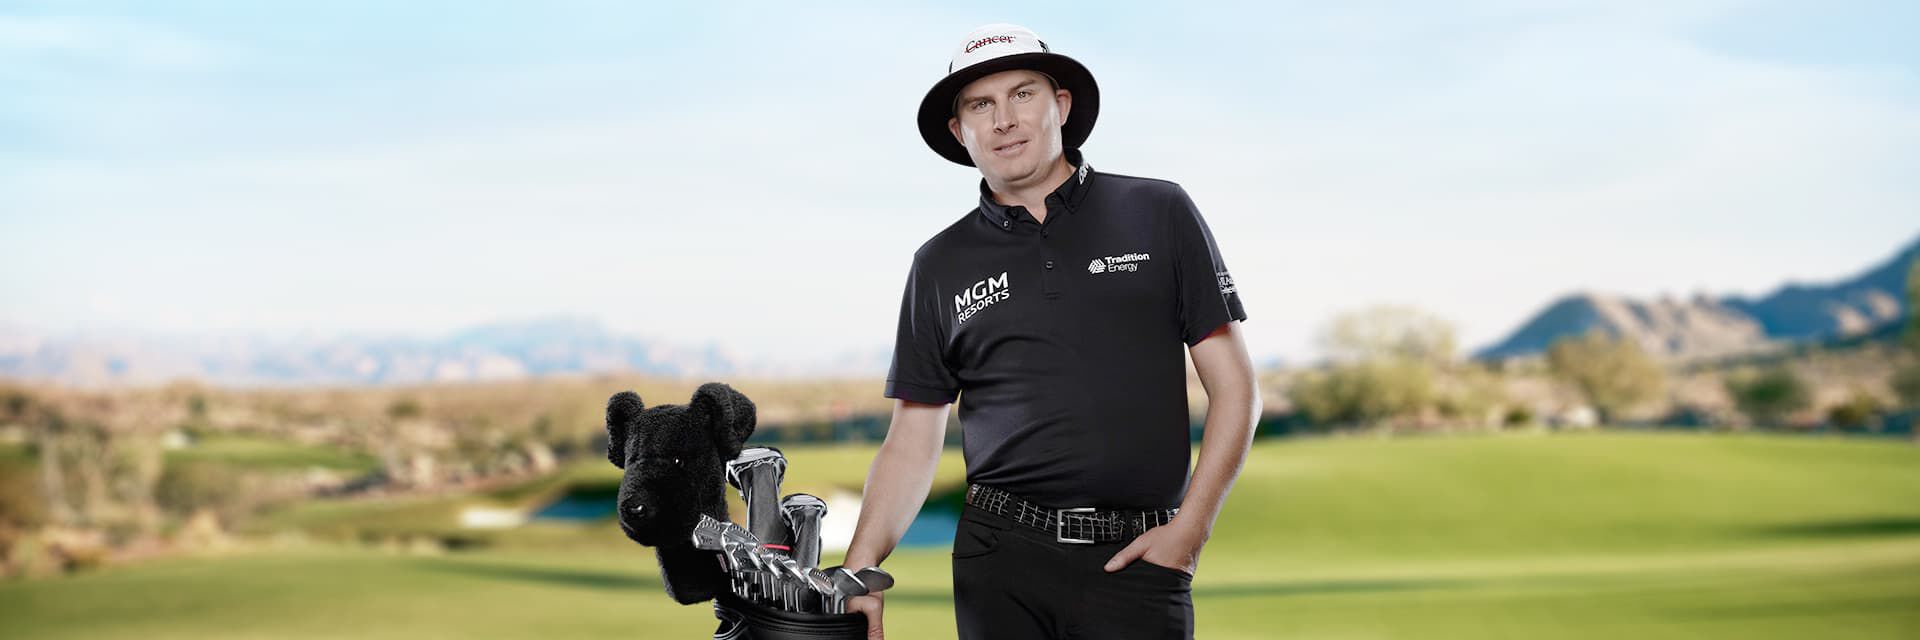 PXG PGA TOUR Pro Joel Dahmen on the course with his golf bag.